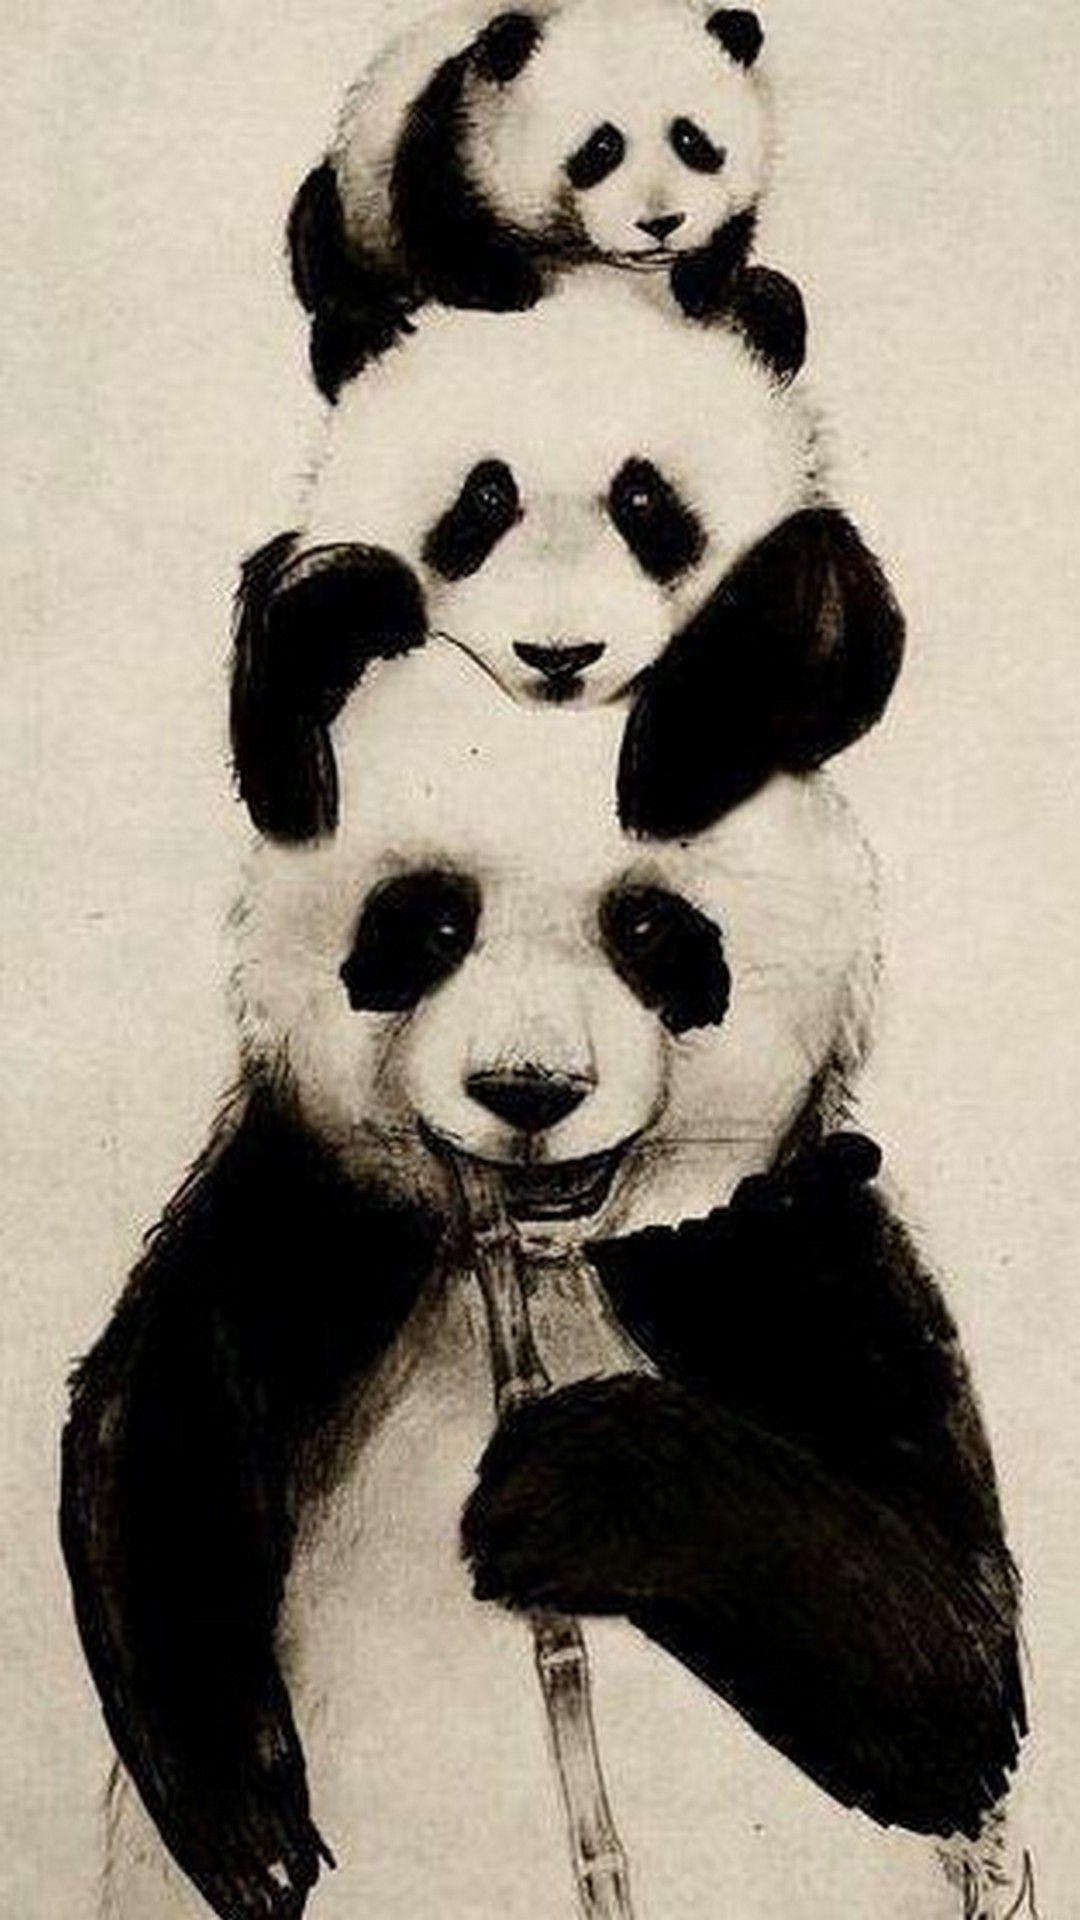 Cute Panda Wallpaper Android. Best HD Wallpaper. Panda wallpaper, Cute panda wallpaper, Panda wallpaper iphone